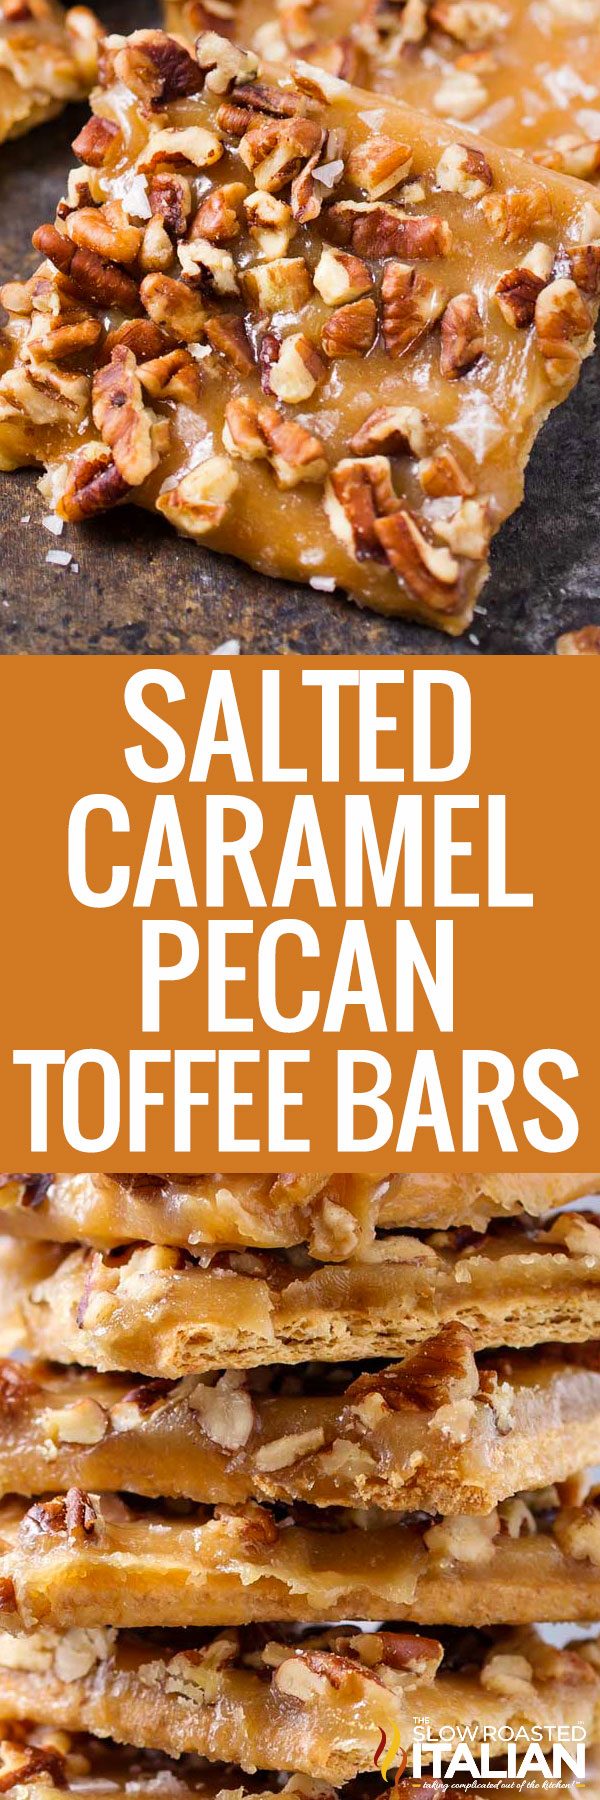 salted caramel pecan toffee bars -pin